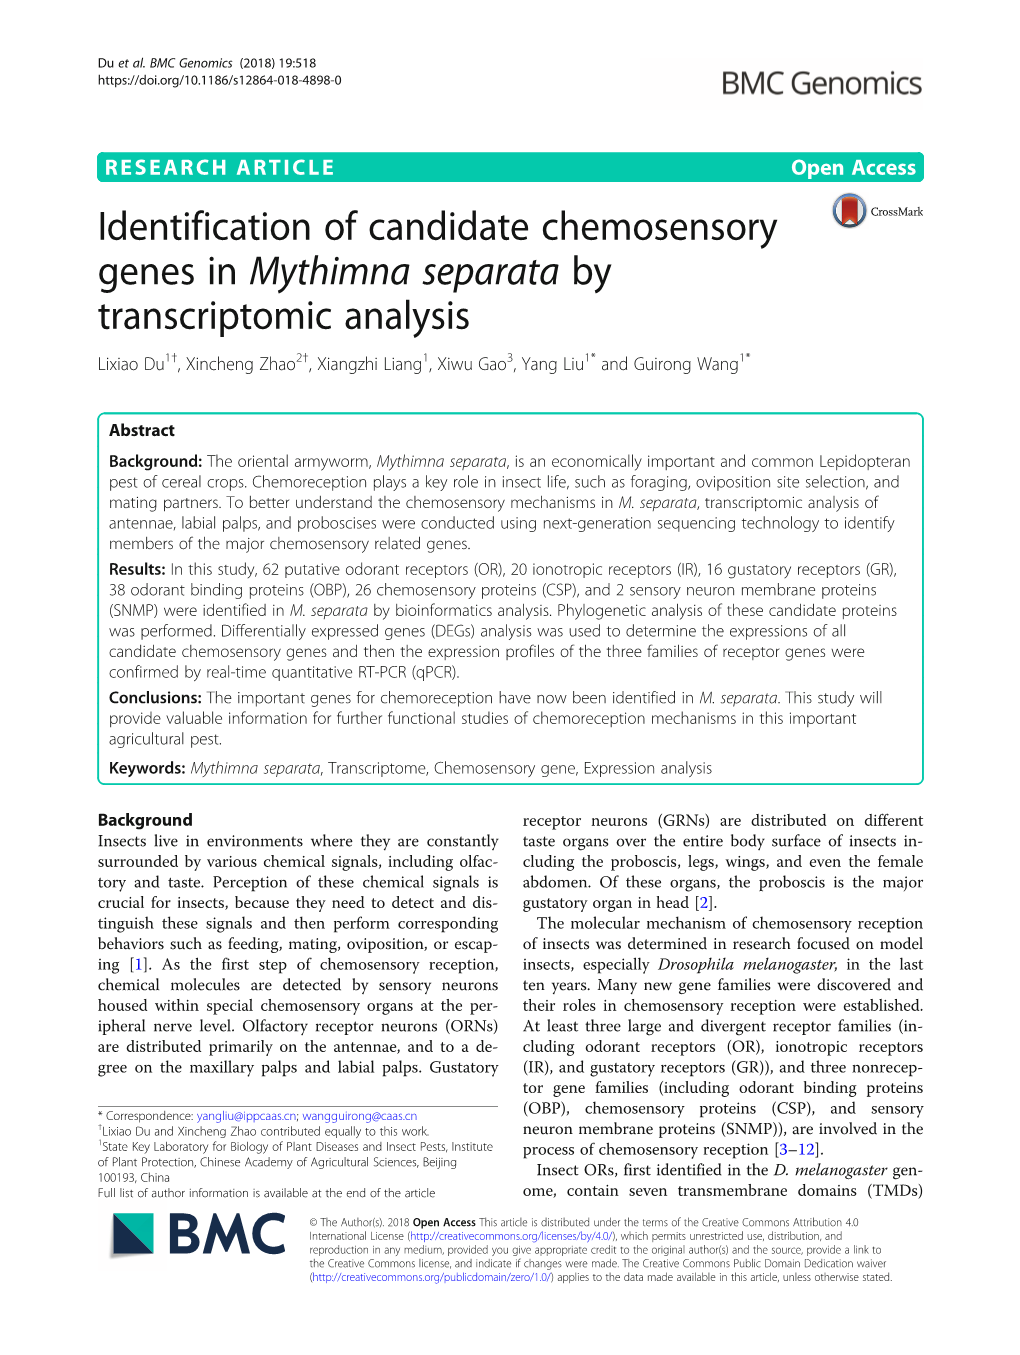 Identification of Candidate Chemosensory Genes in Mythimna Separata by Transcriptomic Analysis